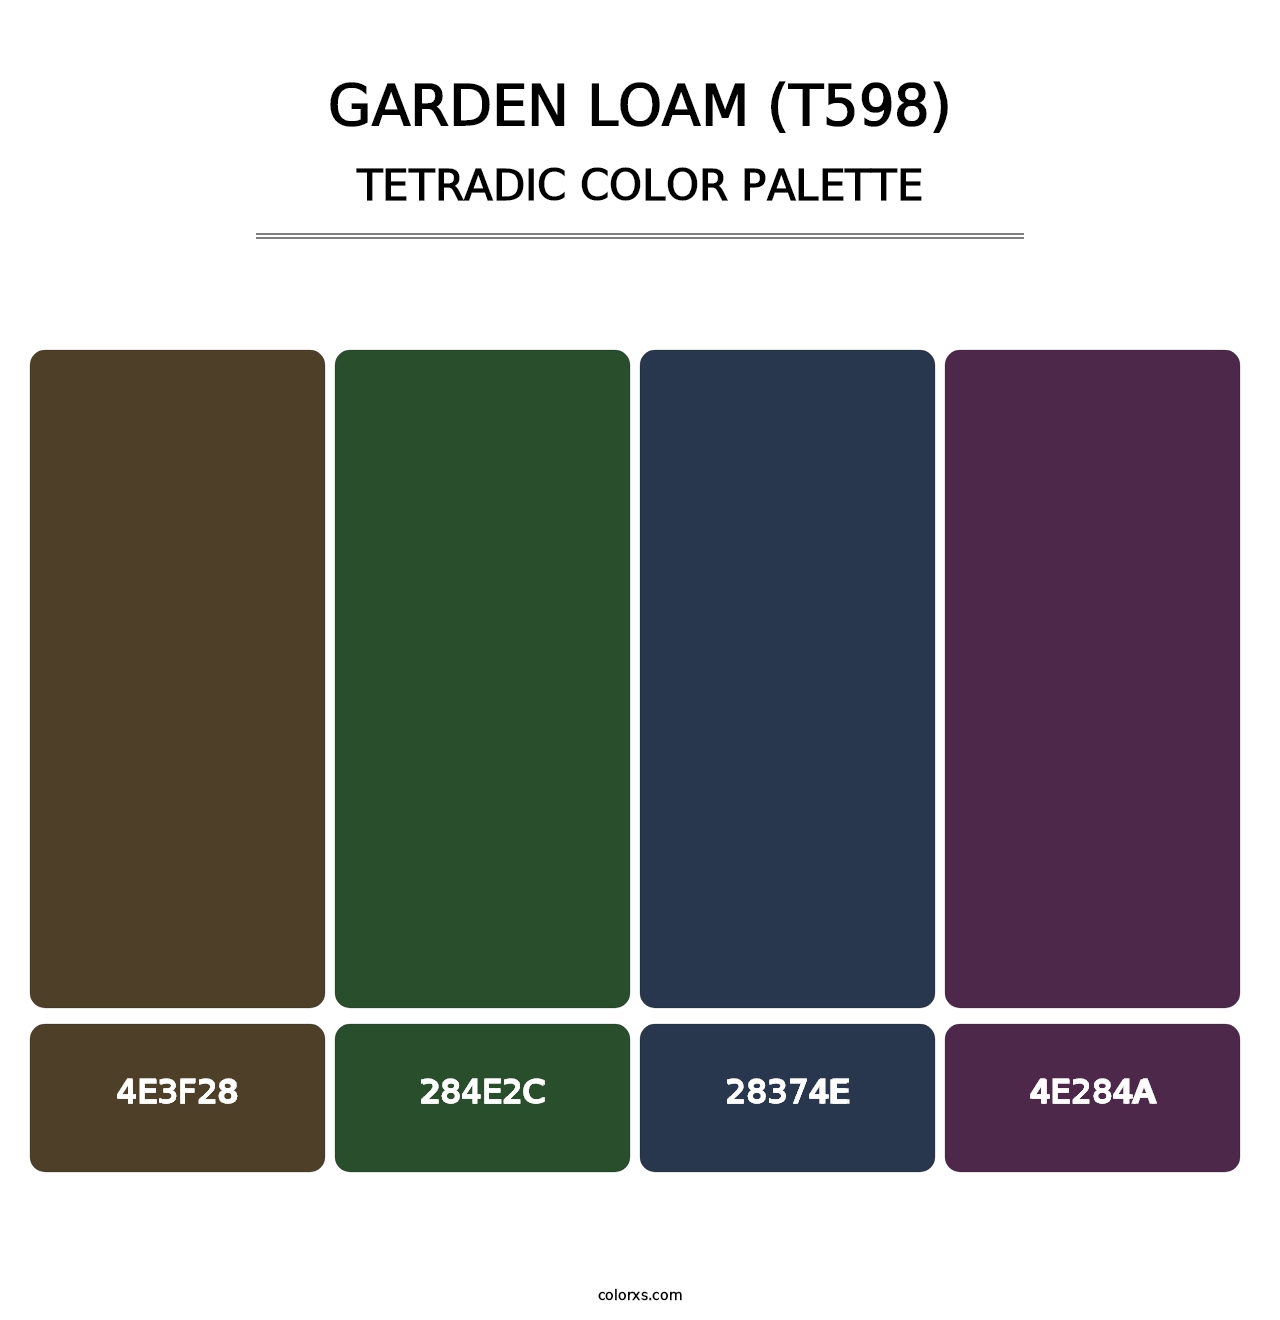 Garden Loam (T598) - Tetradic Color Palette